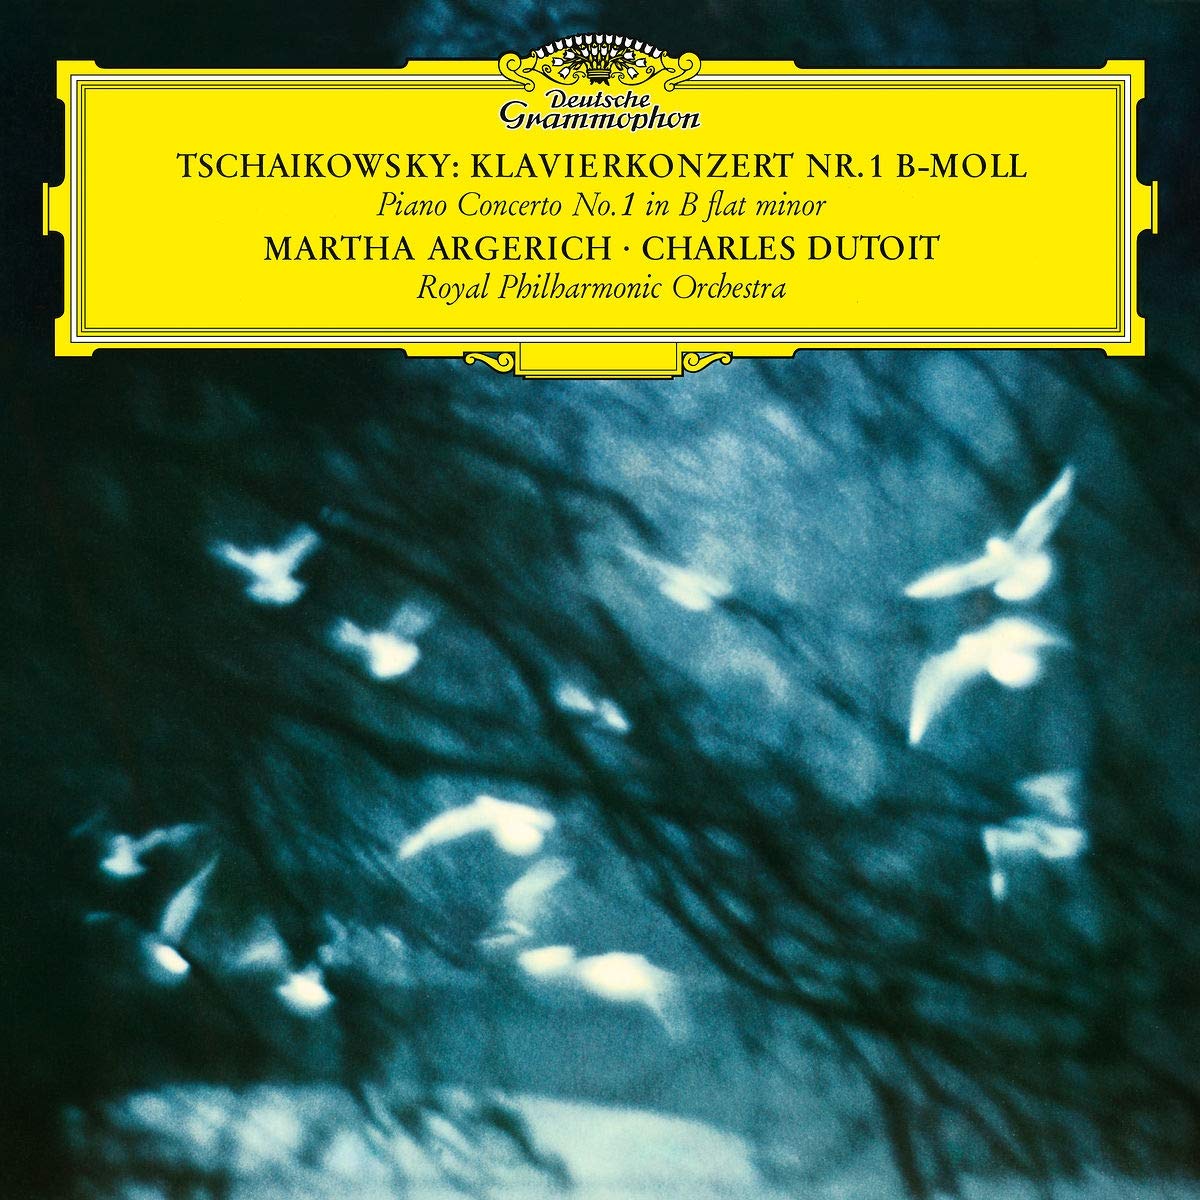 Виниловая пластинка Martha Argerich Tchaikovsky Klavierkonzert Nr.1 B-moll